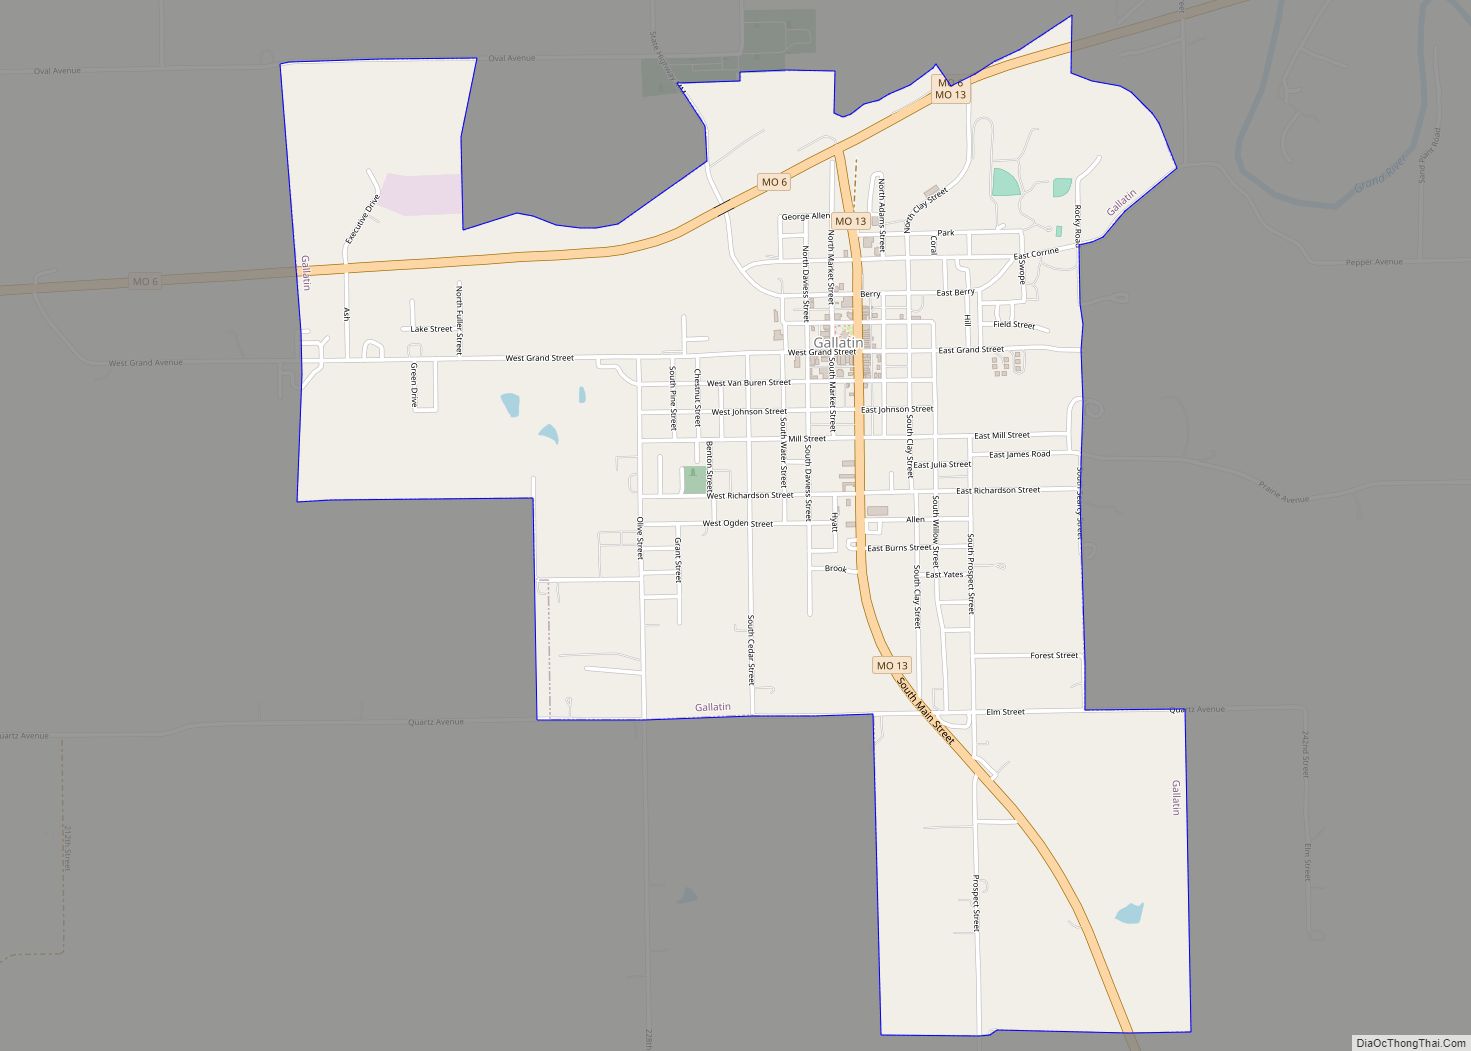 Map of Gallatin city